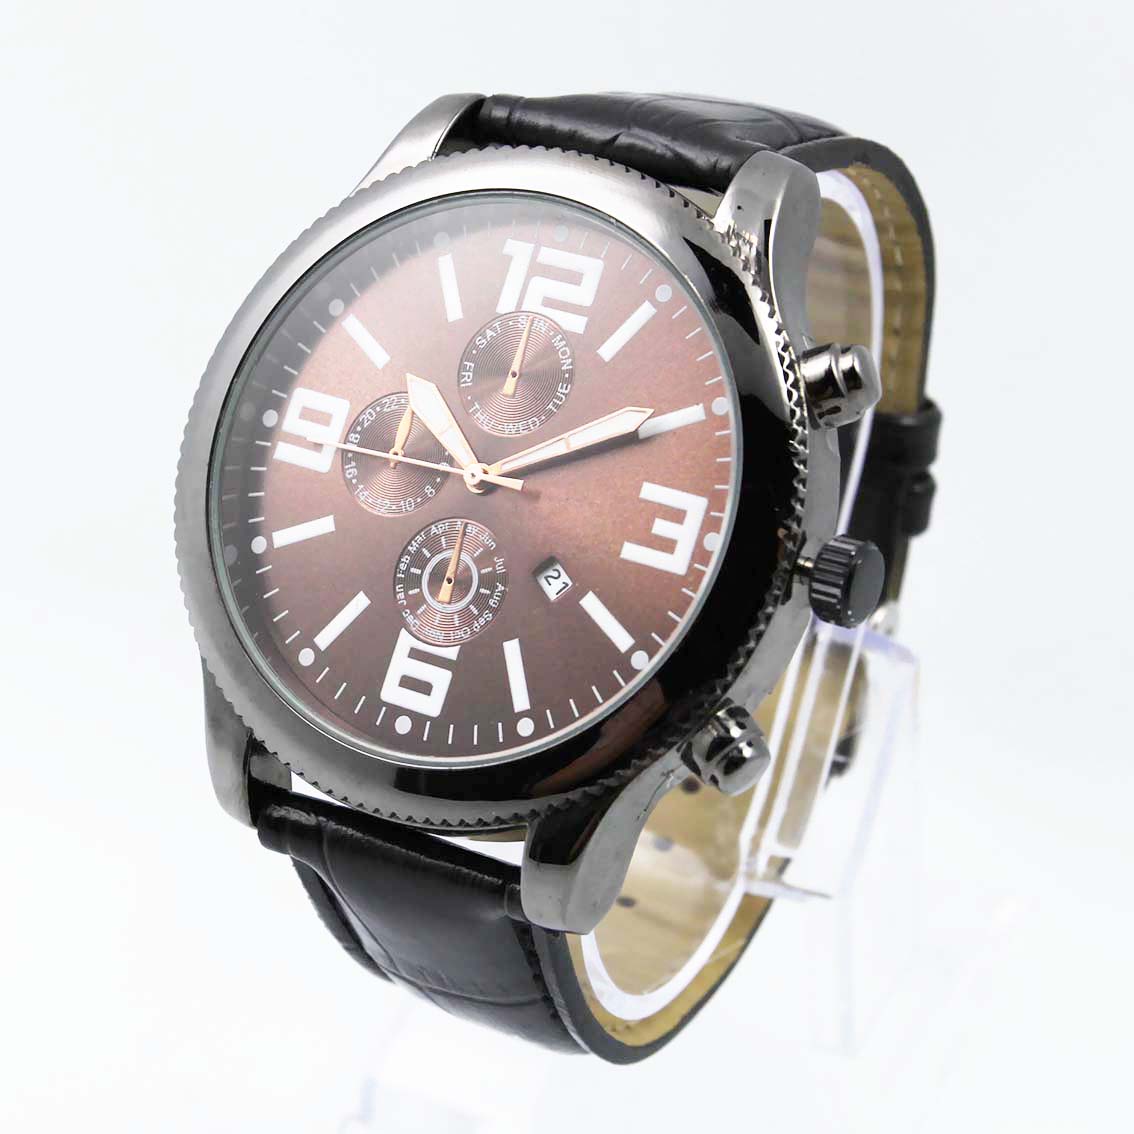 #02092Men's wristwatch quartz analog leather strap watch